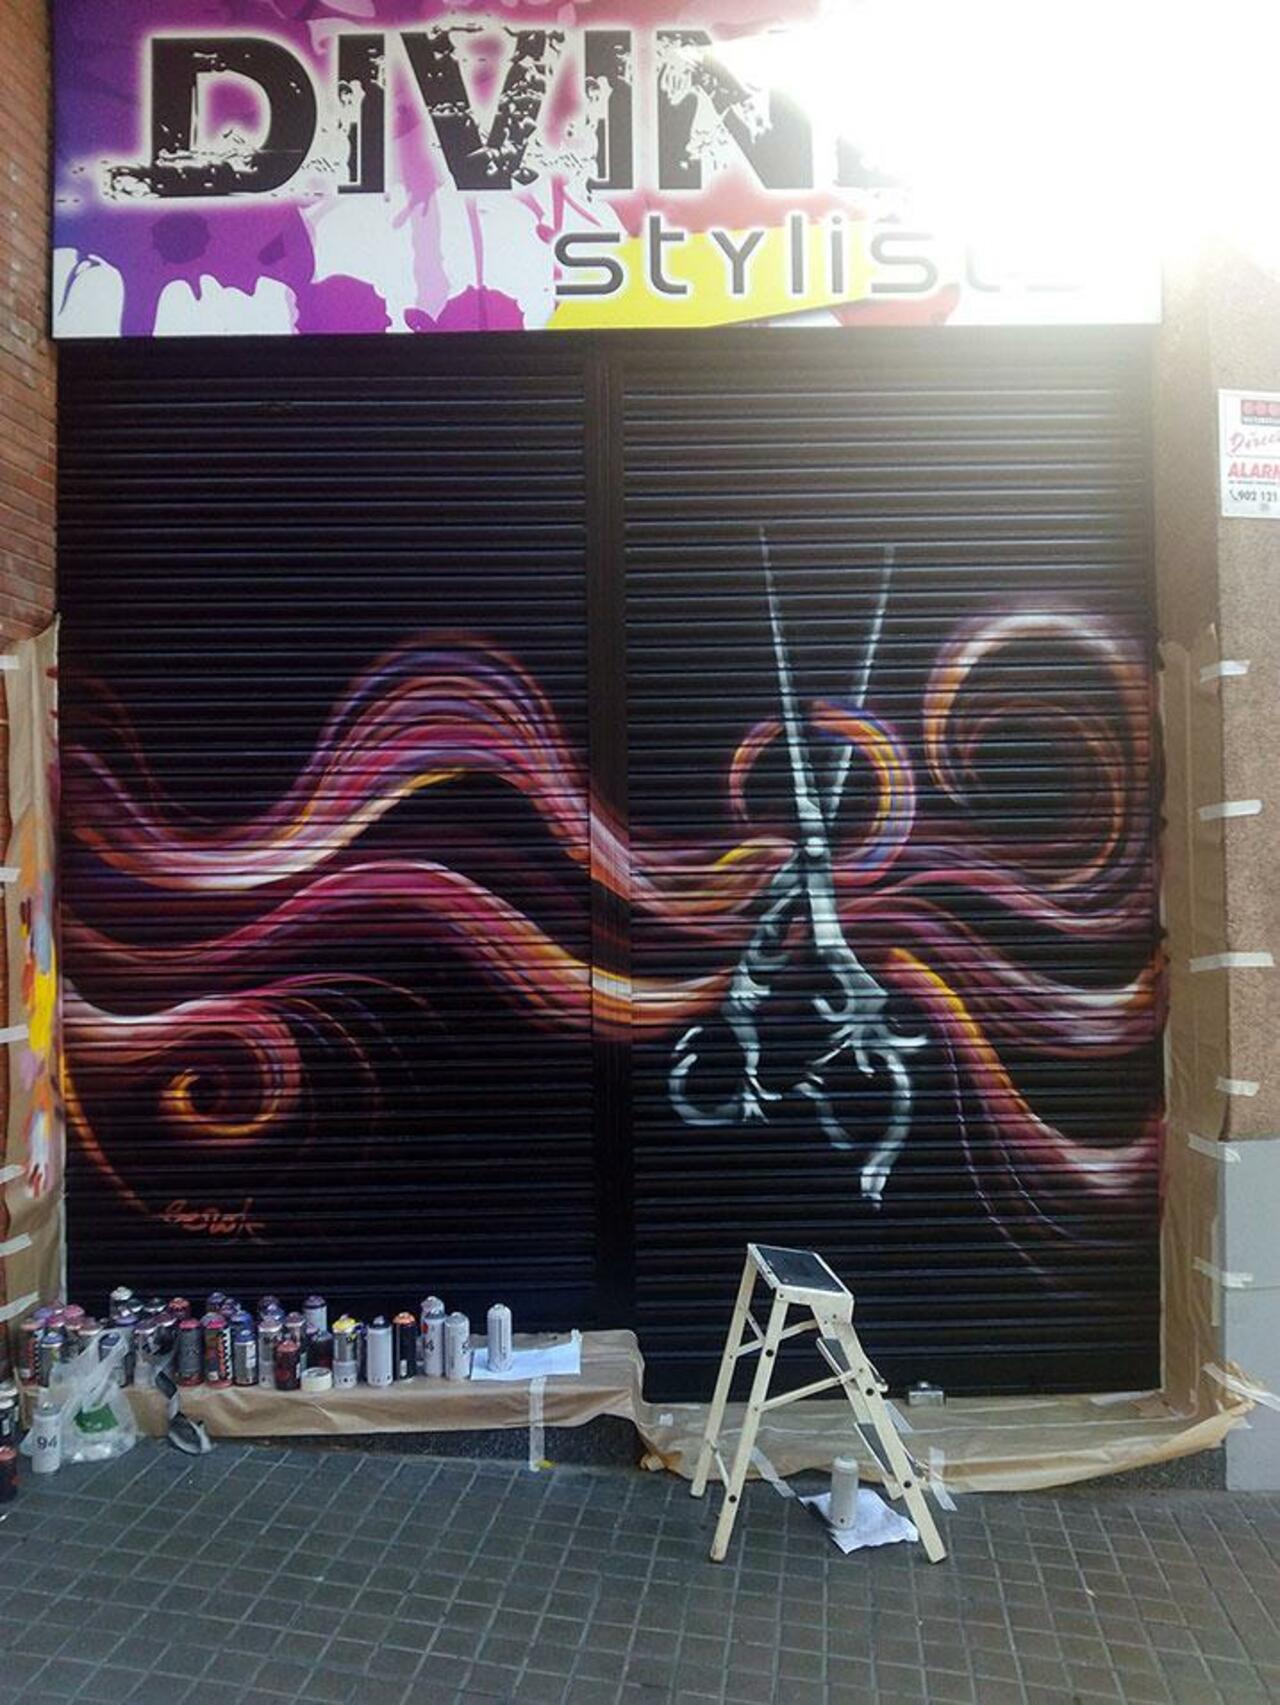 RT @Berokone: Decoración #graffiti mural en persiana de peluquería Divine Stylists.
#arteurbano http://t.co/UPmQGjpCAP